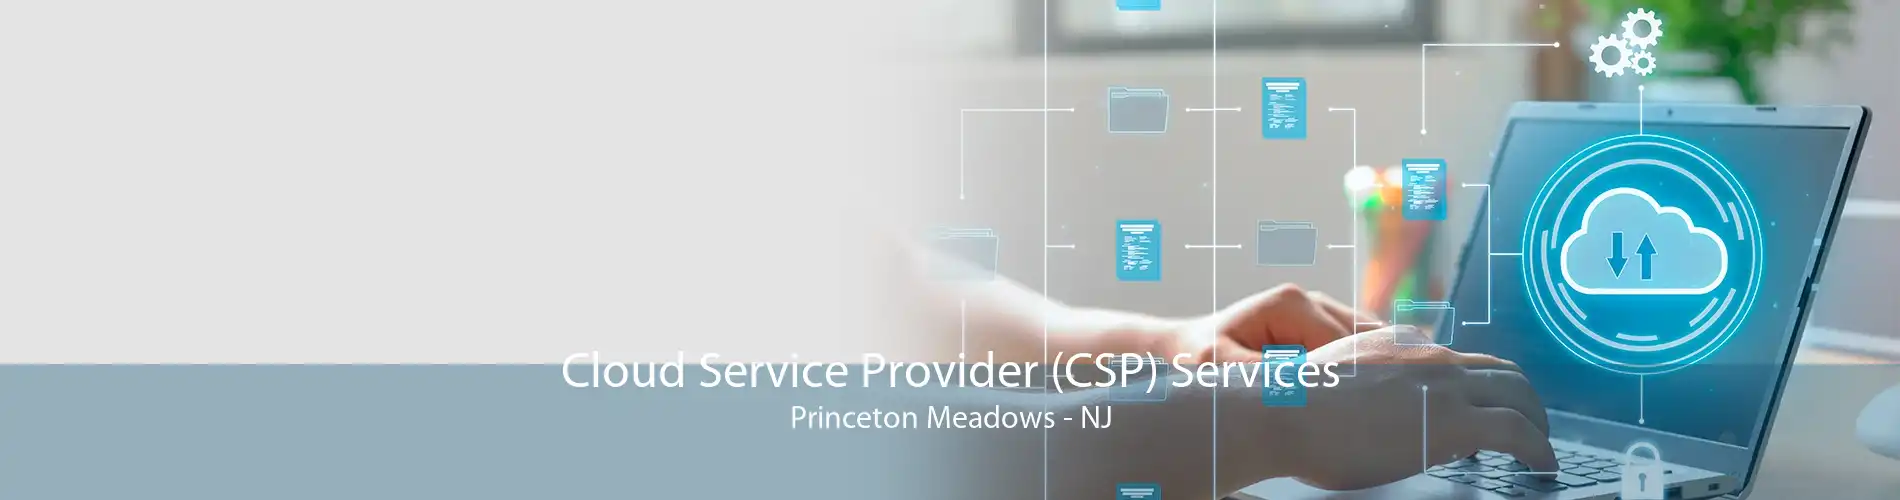 Cloud Service Provider (CSP) Services Princeton Meadows - NJ